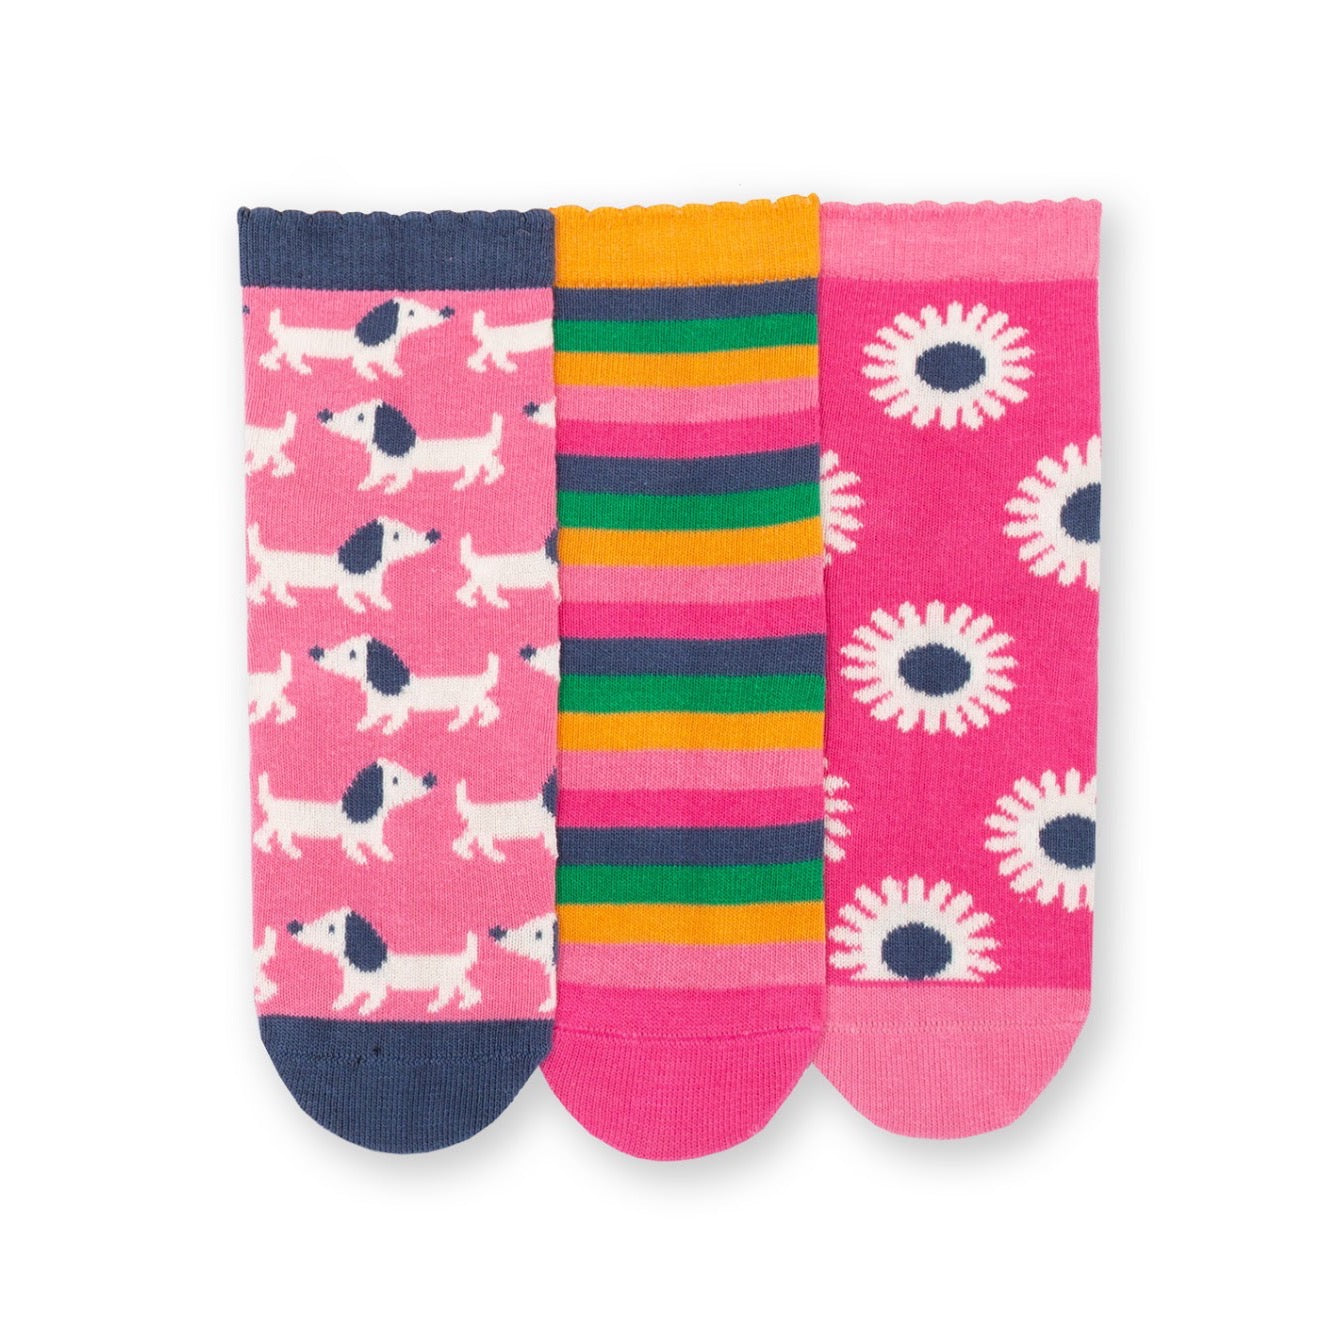 Kite Puppy Pals 3 Pack Socks 7453 Clothing 0-6M / Pink,6-12M / Pink,1-2YRS / Pink,UK3-5 ADULT / Pink,UK6-8 / Pink,UK9-12 / Pink,UK13-2 / Pink